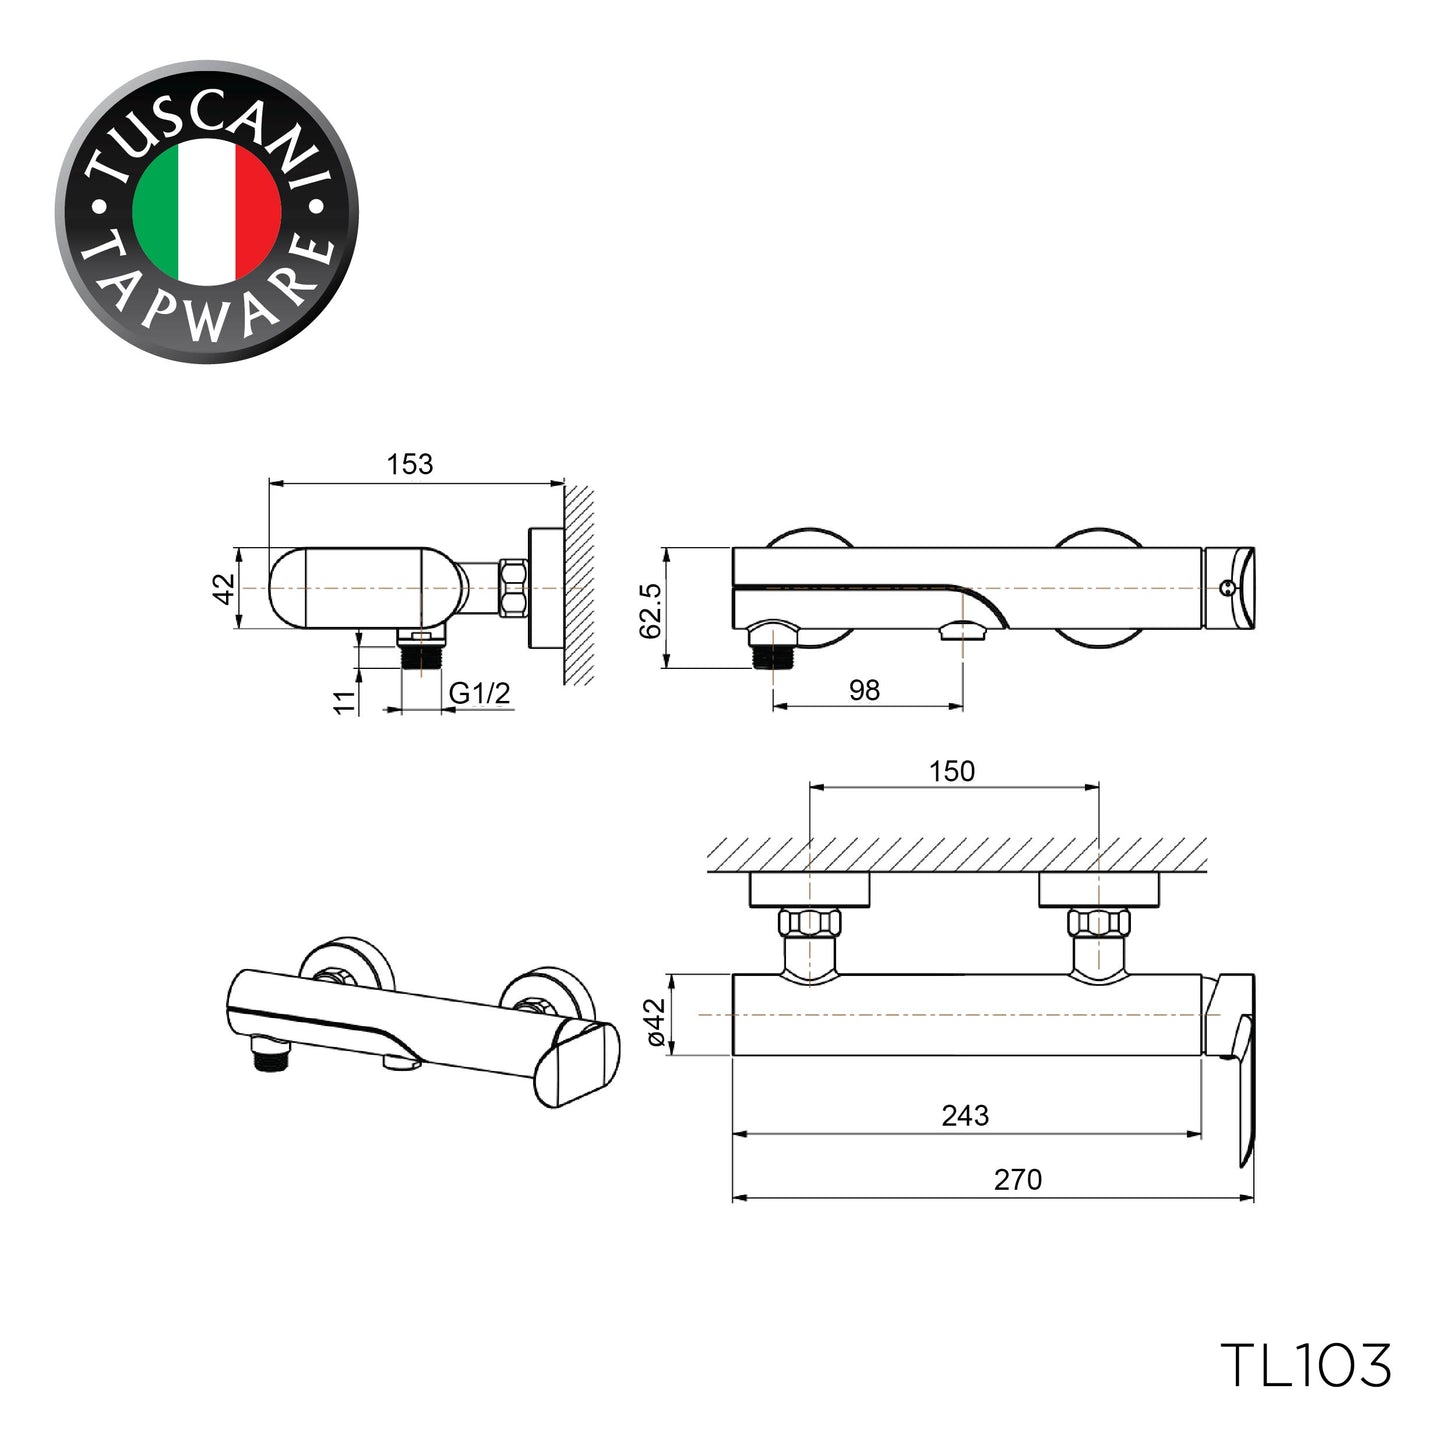 TL103 - Lavanzi Series - Bath & Shower Mixer